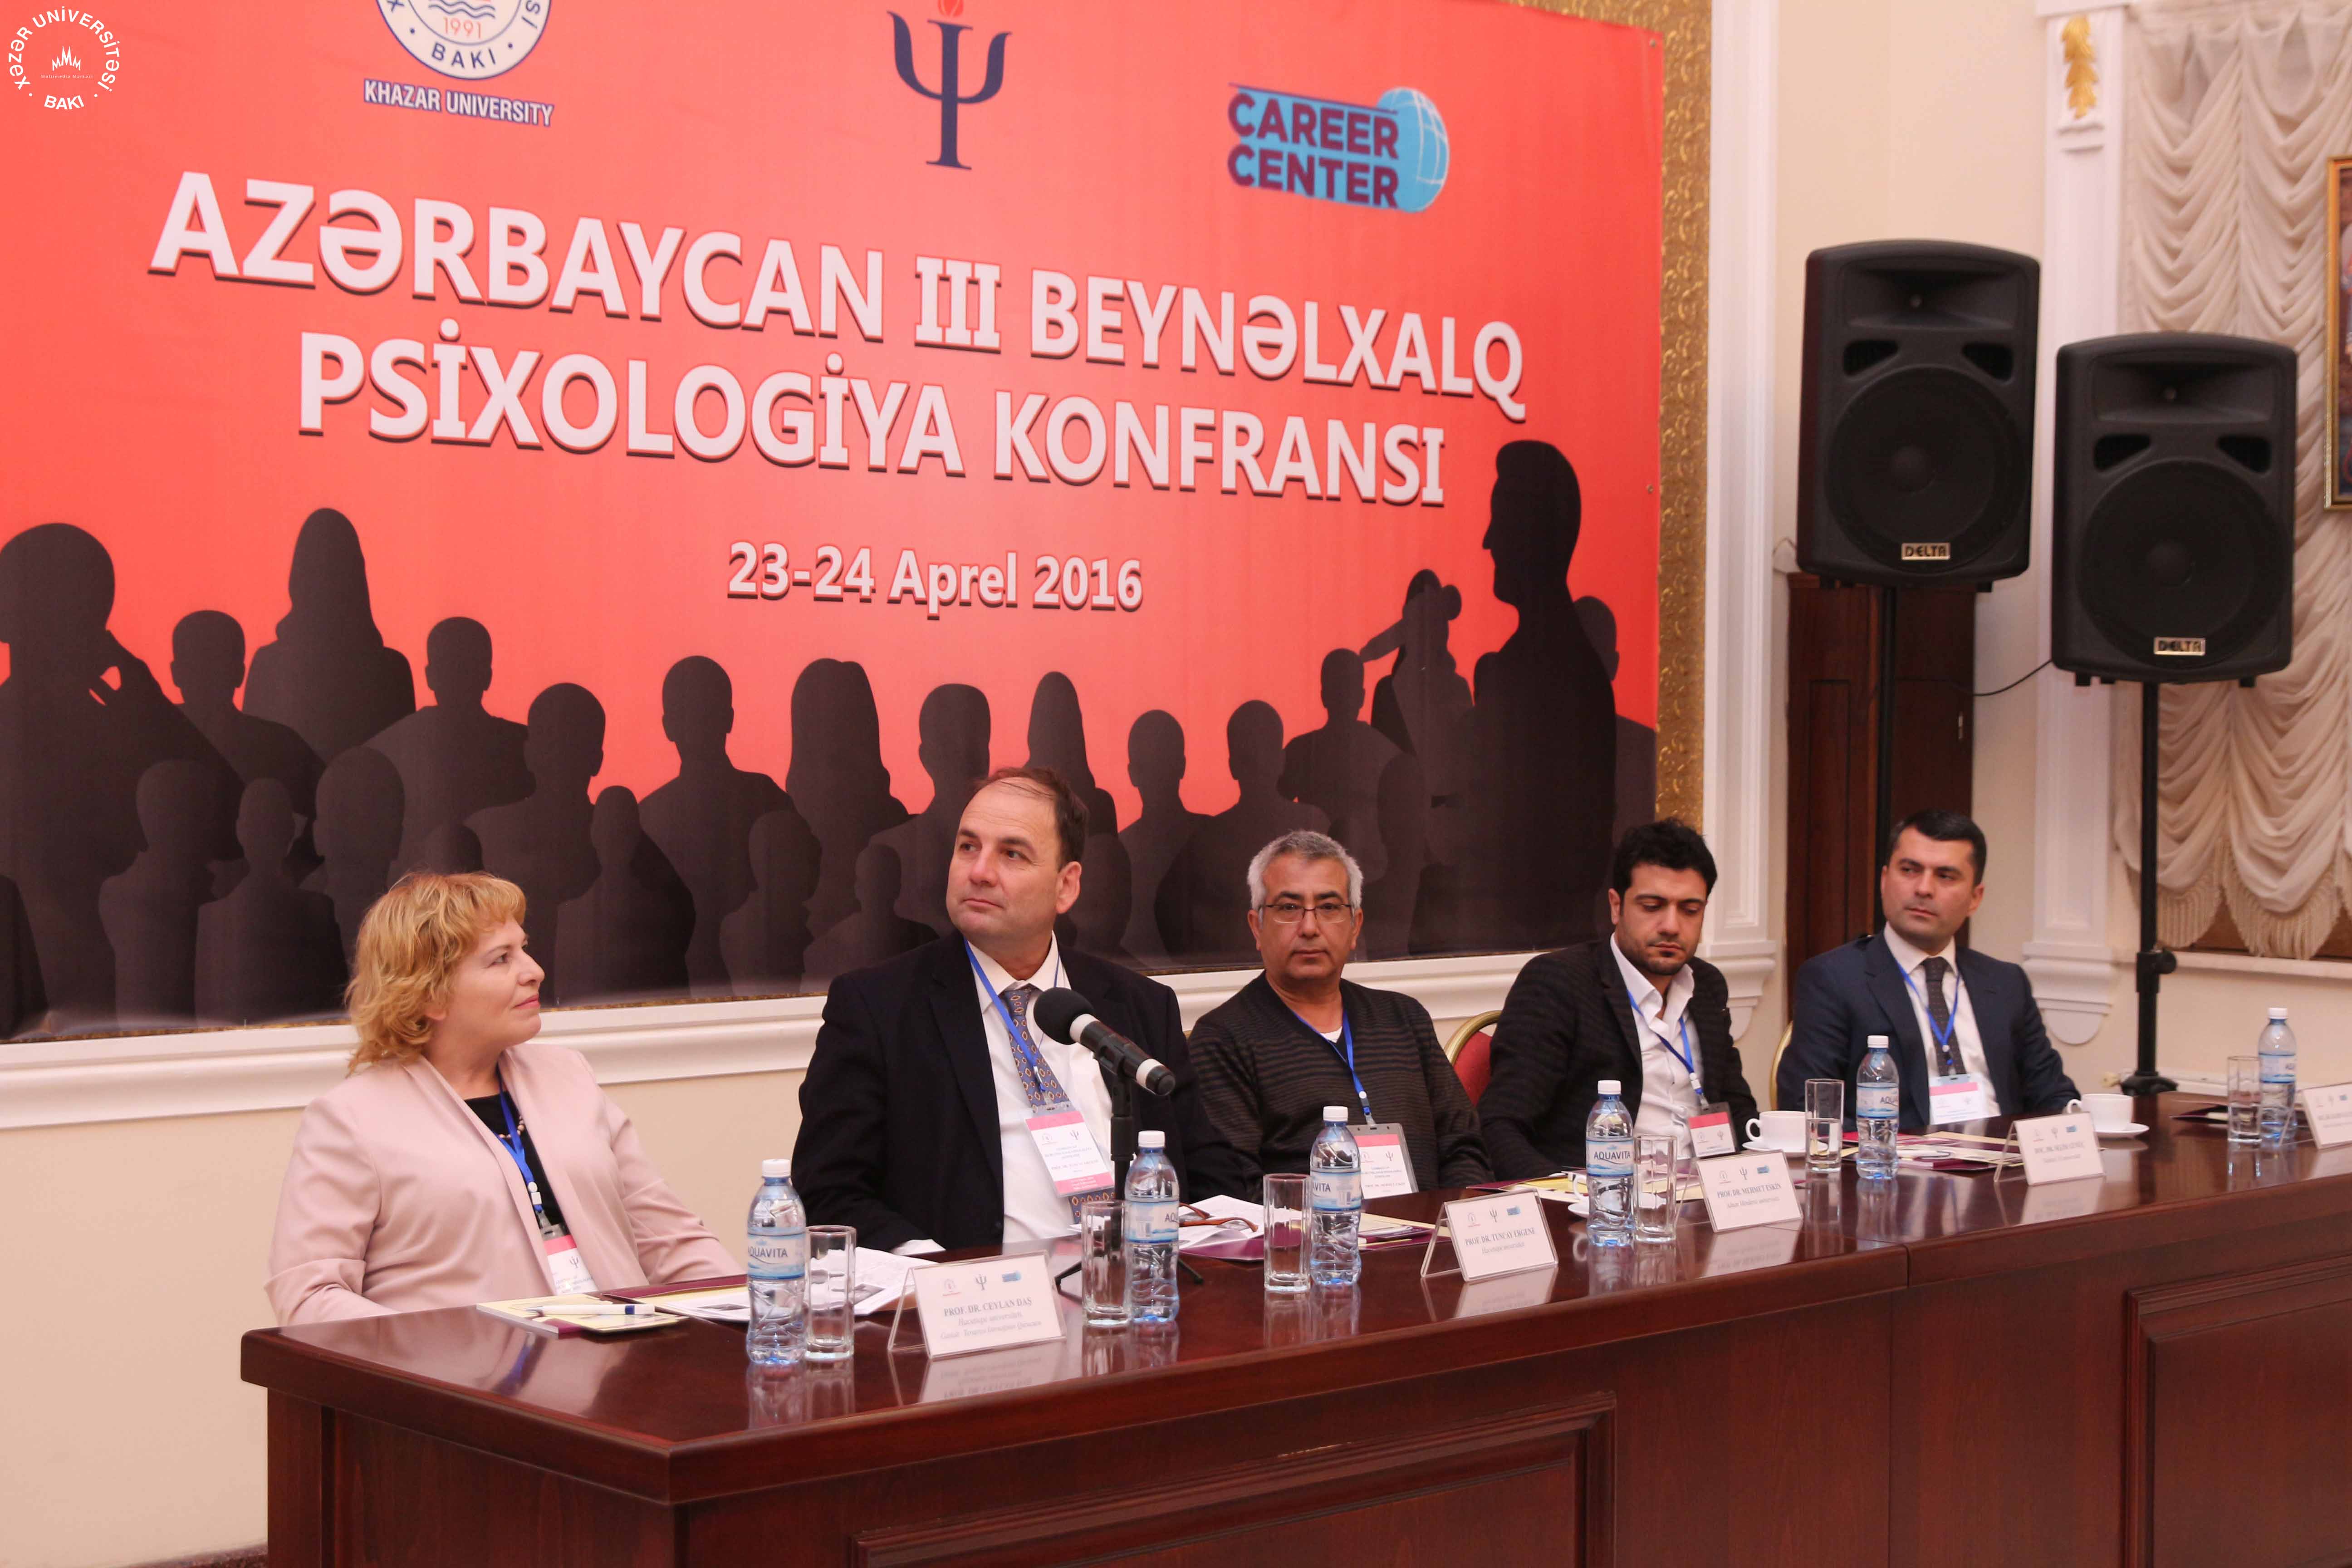 Azerbaijan’s III International Psychology Conference